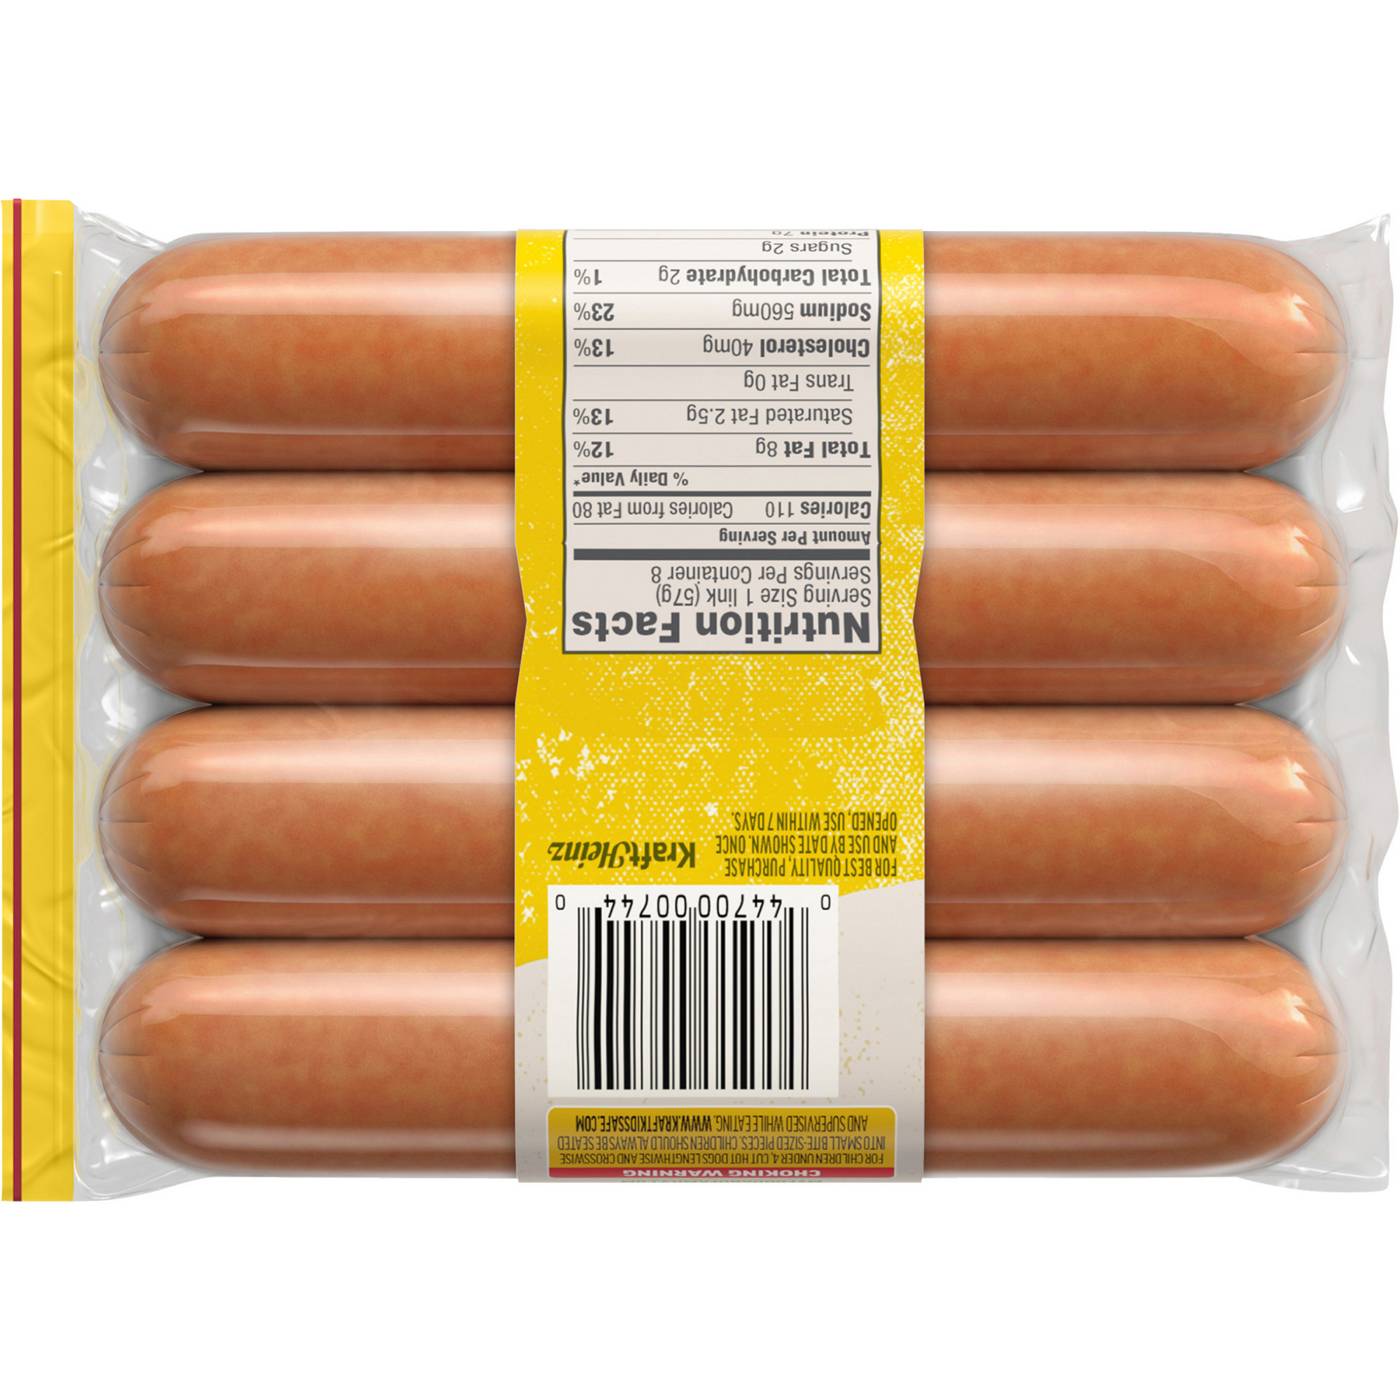 Oscar Mayer Natural Turkey Hot Dogs; image 6 of 7